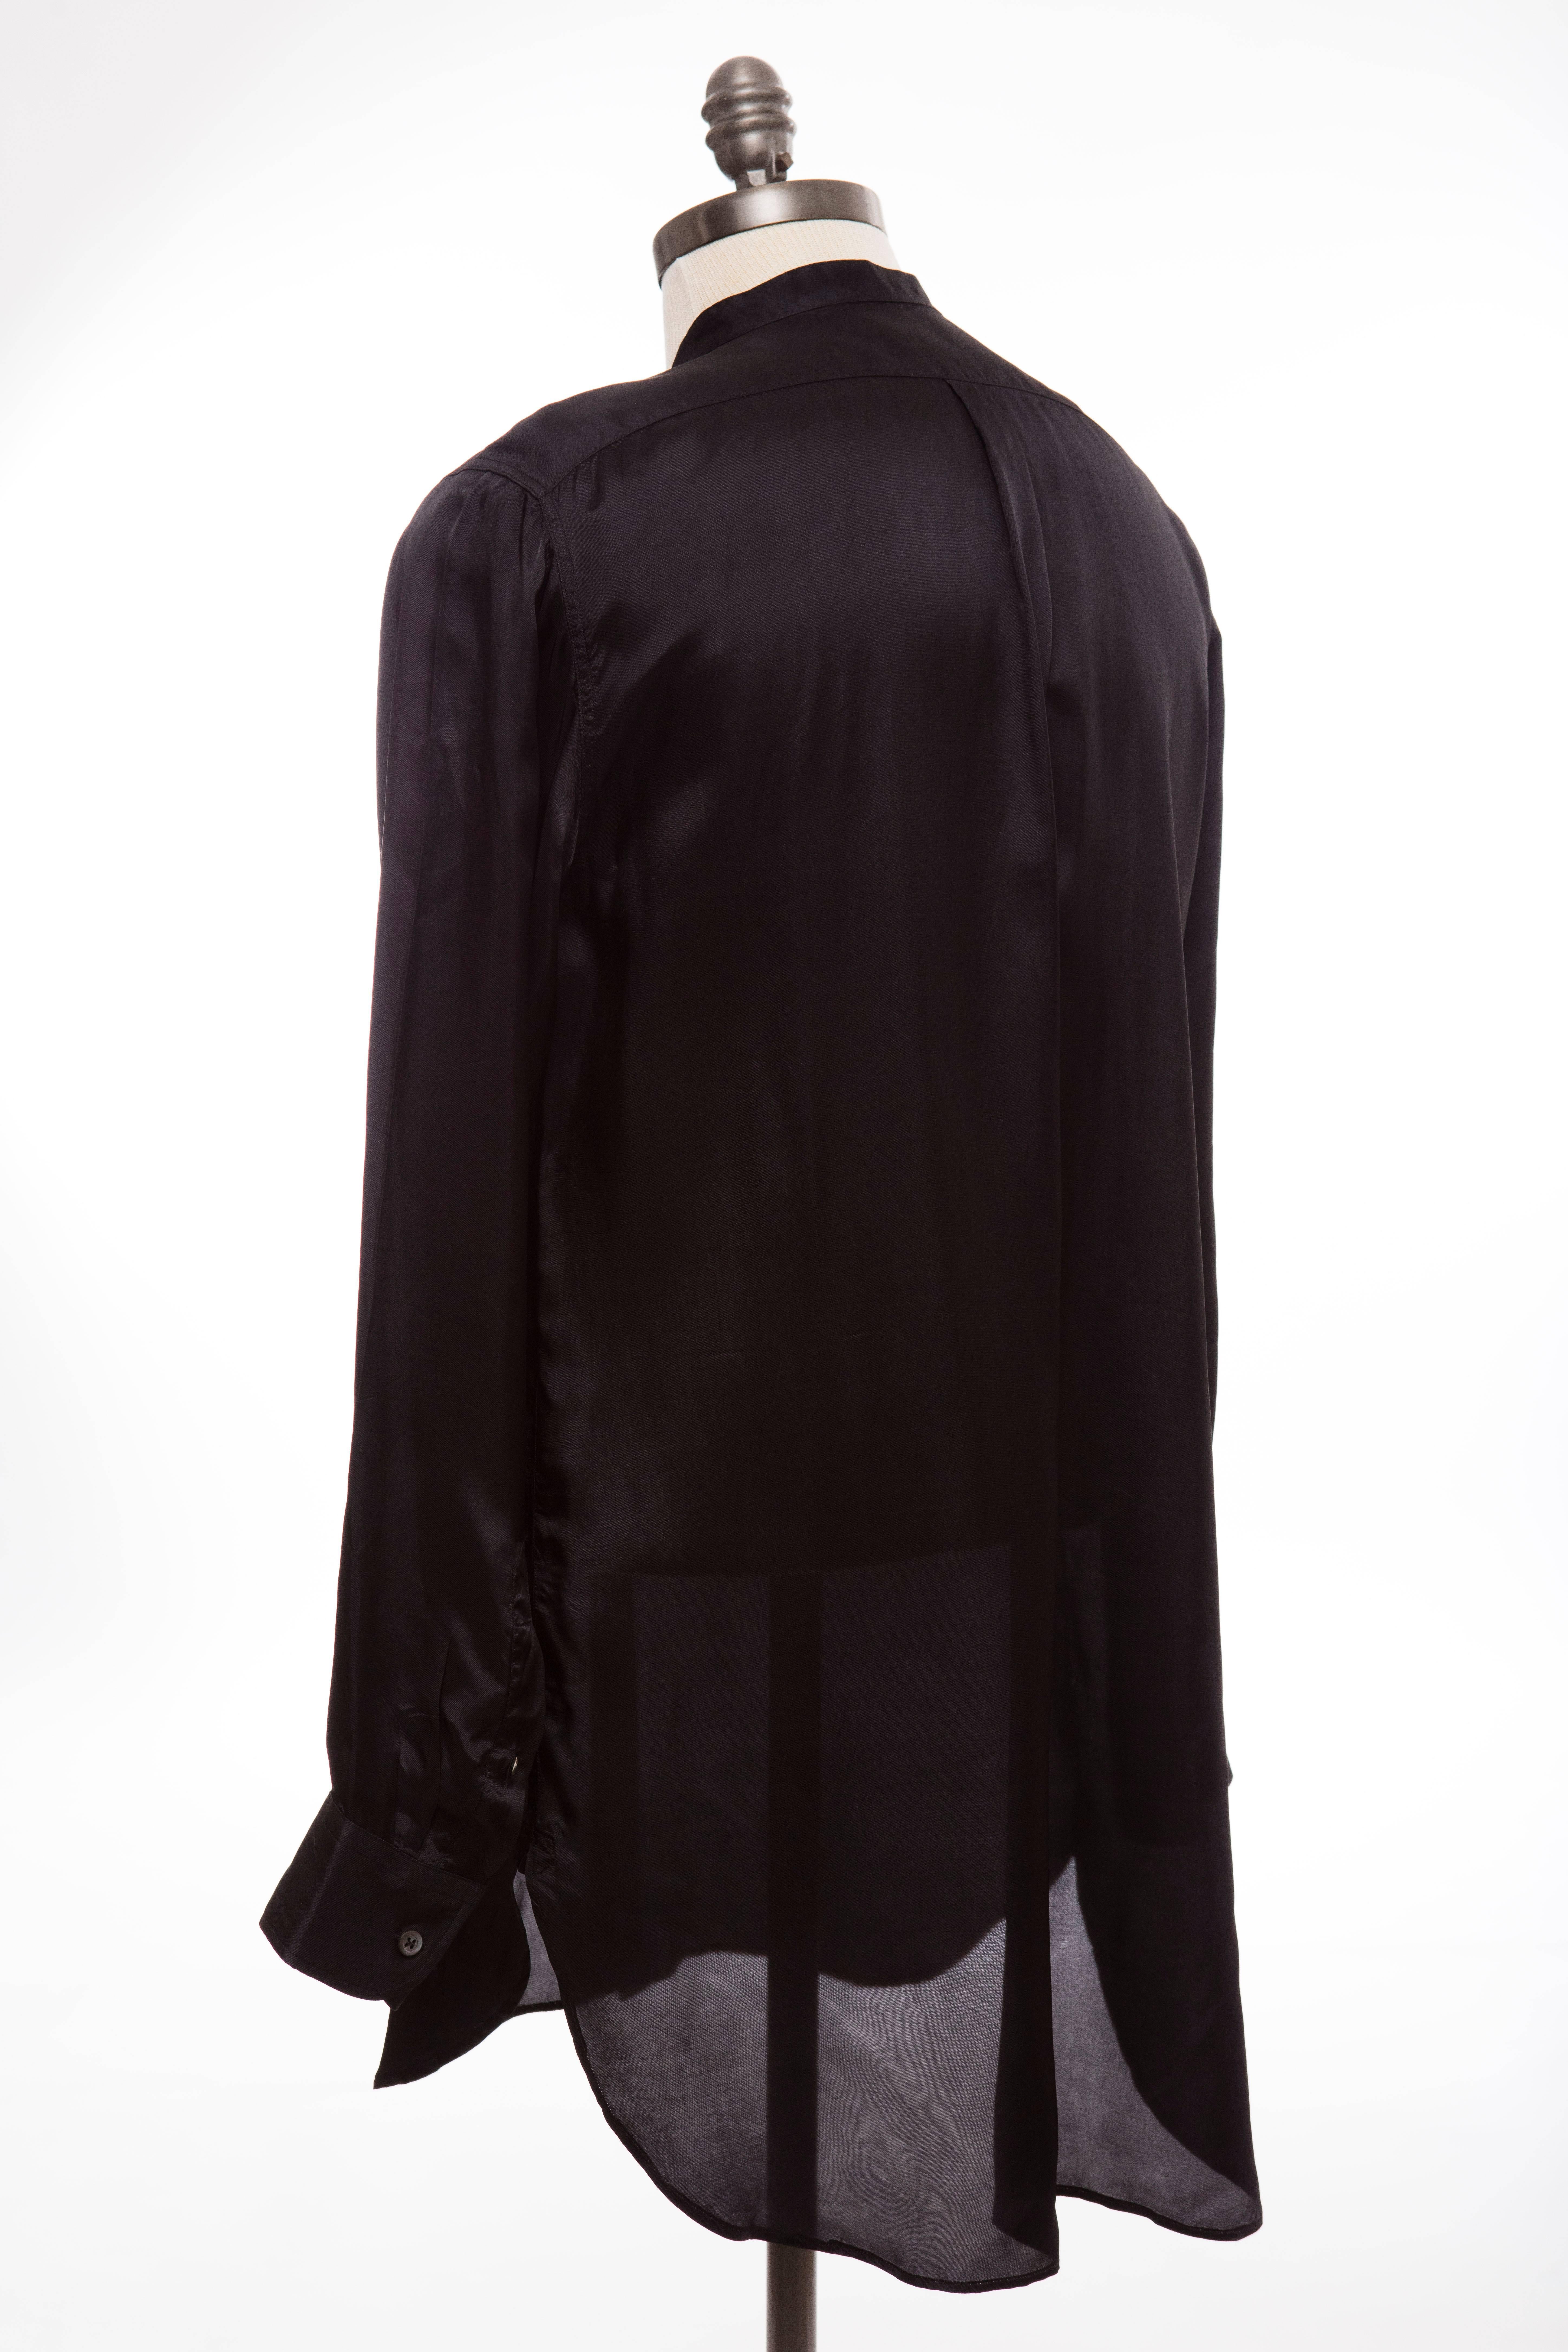 Dries Van Noten Men's Black Viscose Shirt With Marilyn Monroe Print, Spring 2016 1